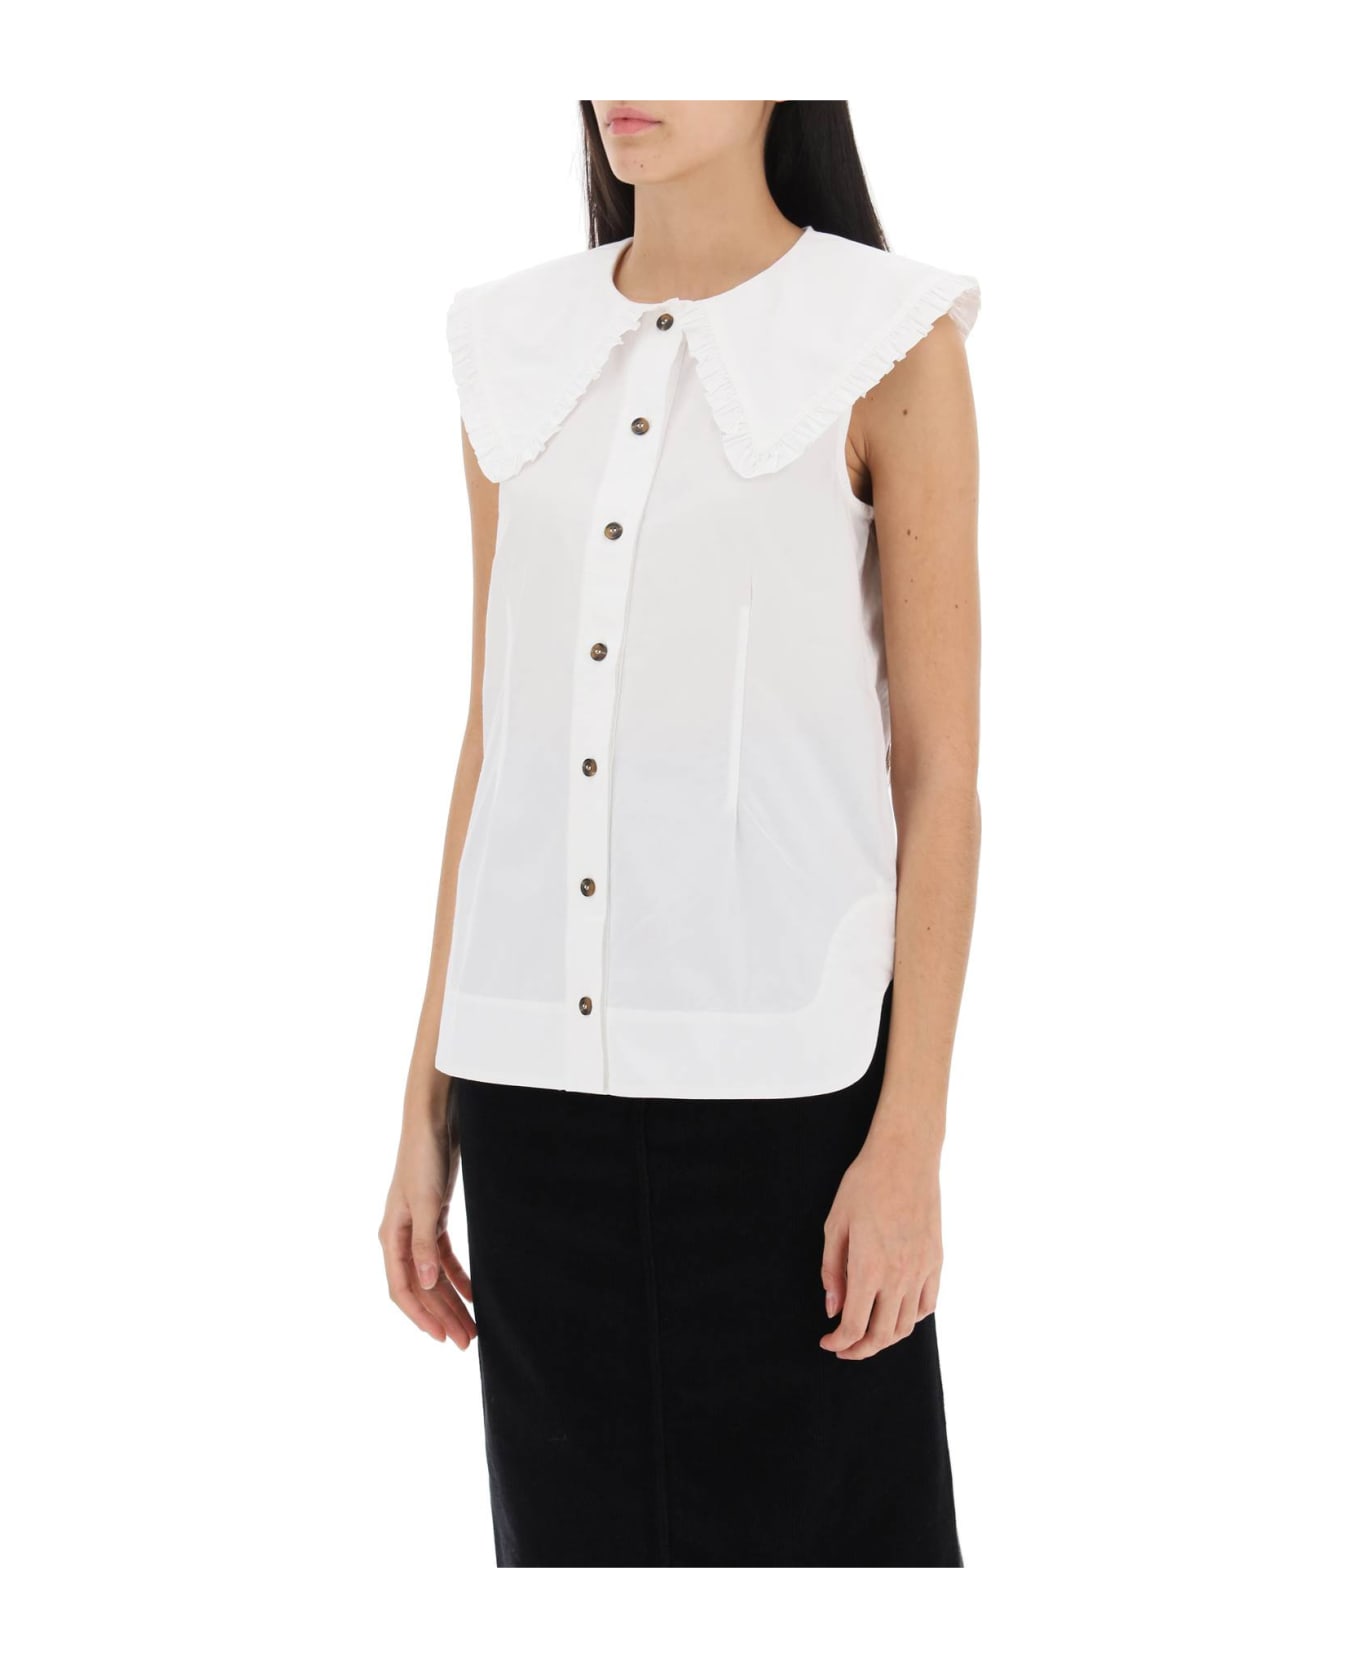 Ganni Sleeveless Shirt With Maxi Collar - BRIGHT WHITE (White) シャツ